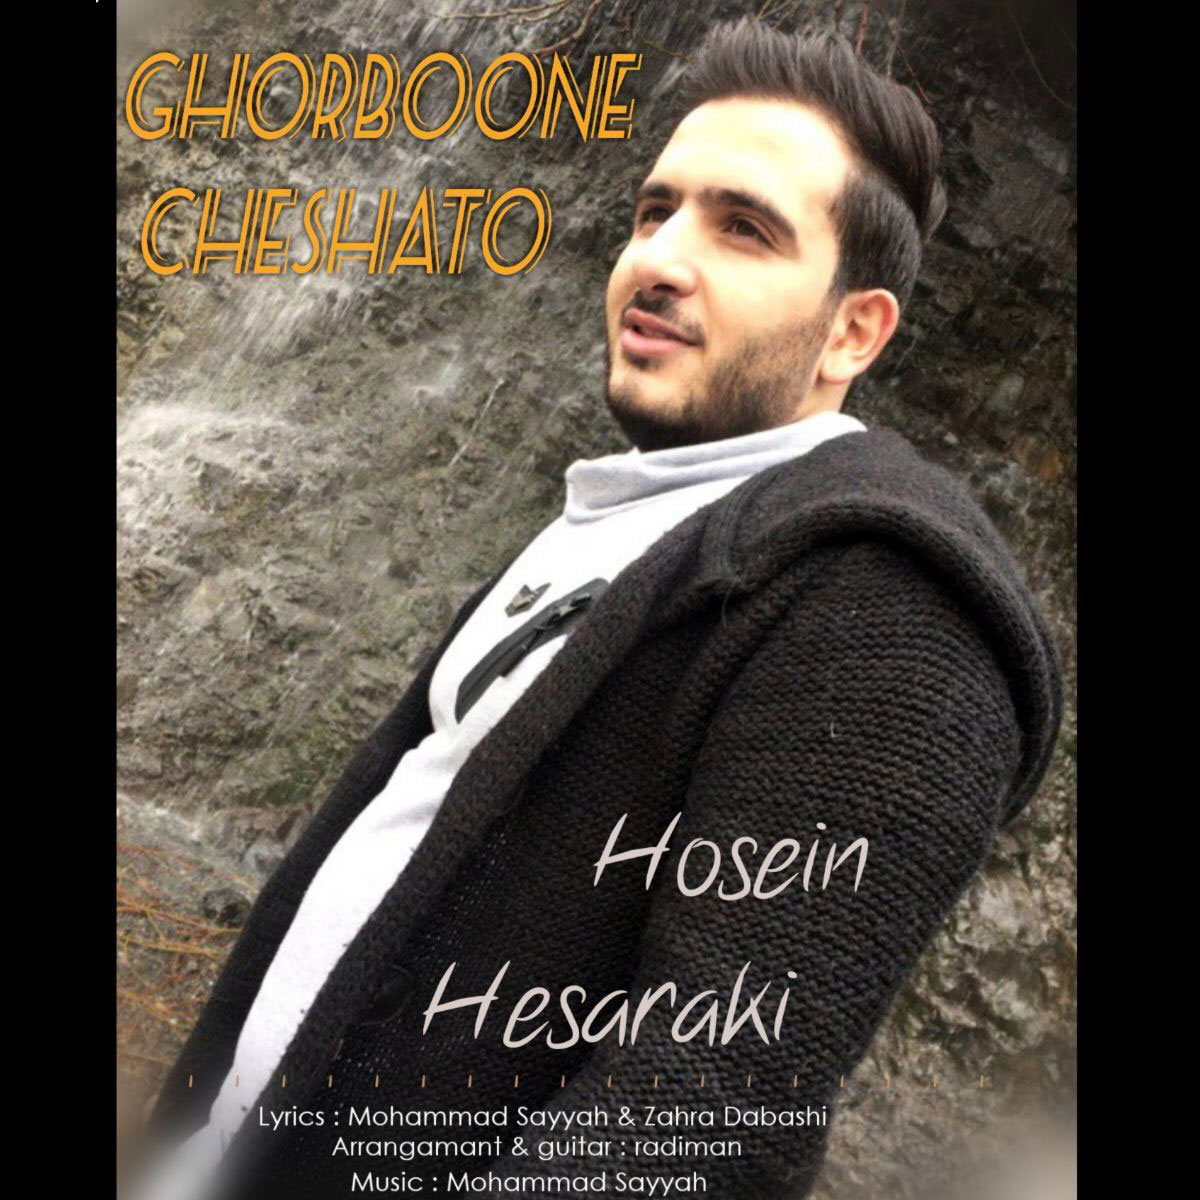 Hosein Hesaraki – Ghorbone Cheshato